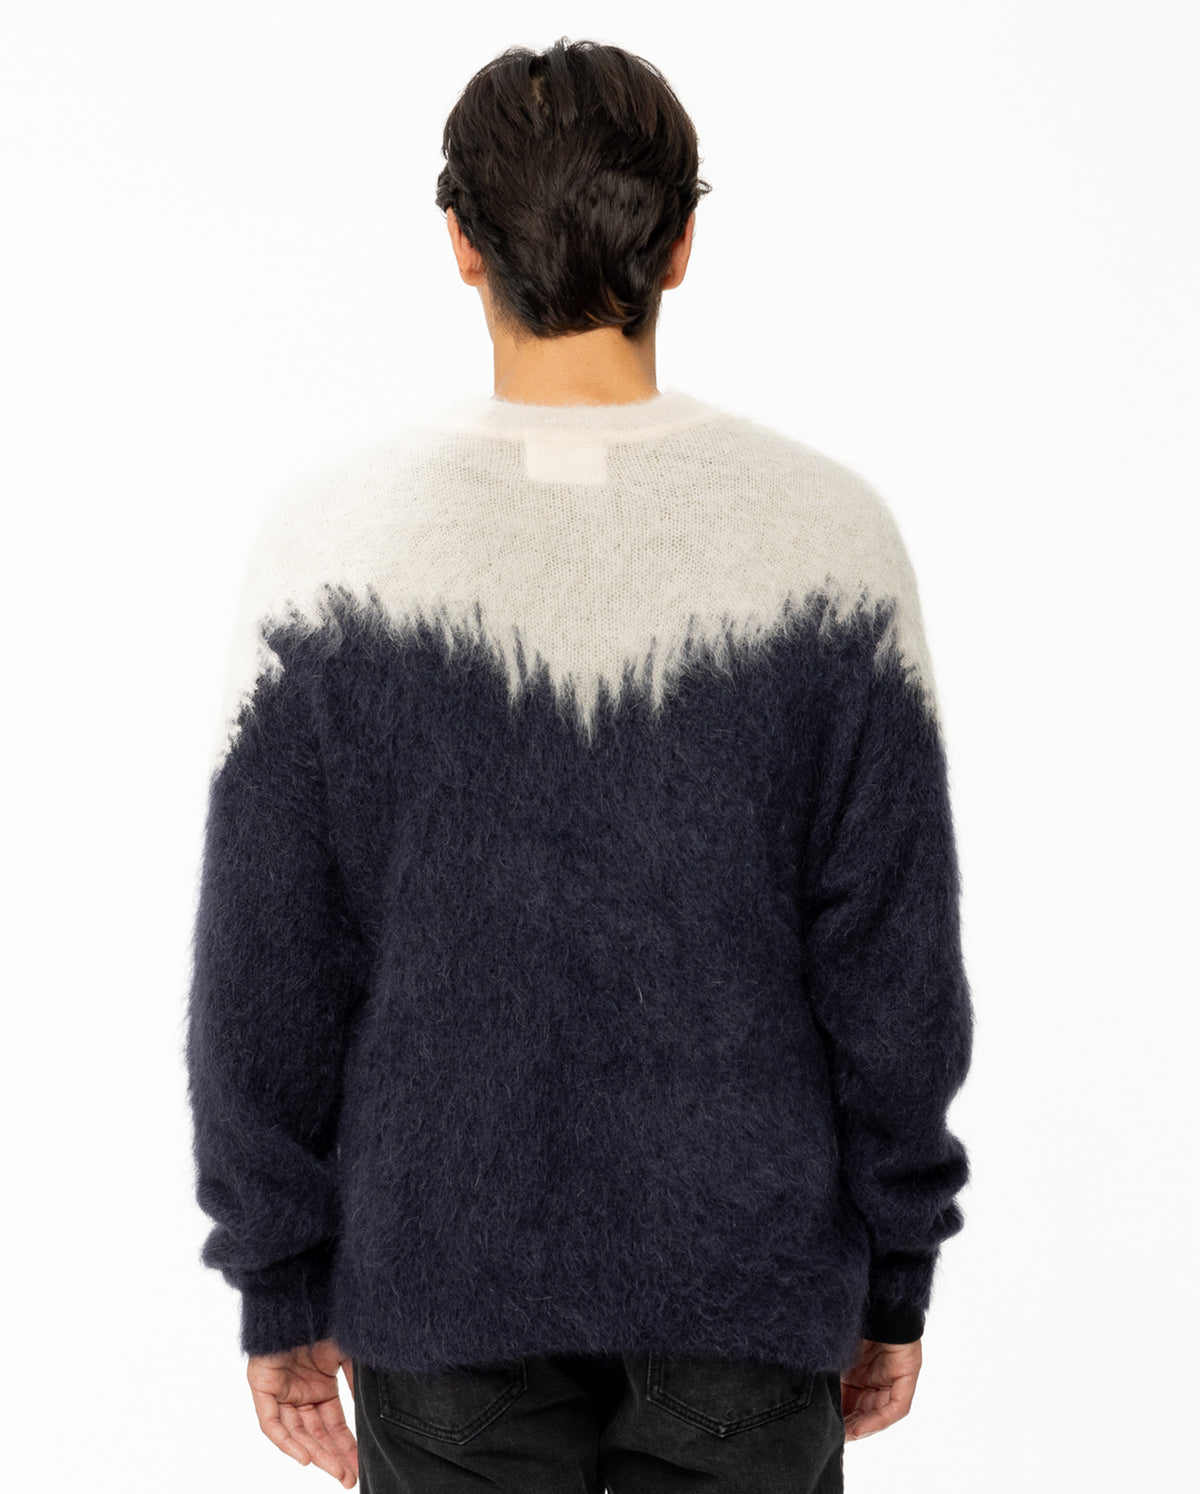 Marius Mohair Crew Sweater - Faded Night